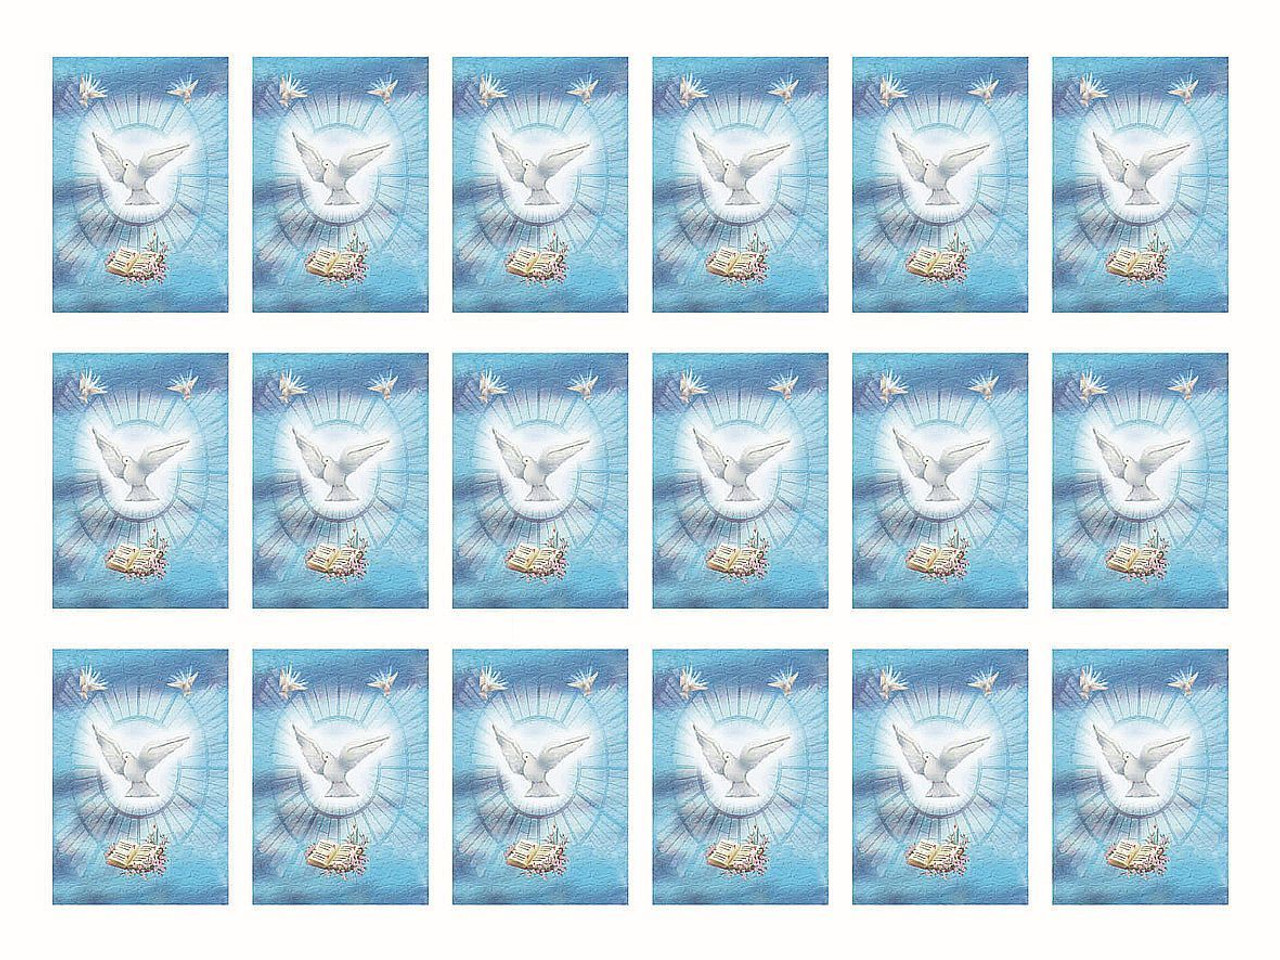 Pokemon Stickers New Sheet of 18  Pokemon stickers, Pokemon, All pokemon